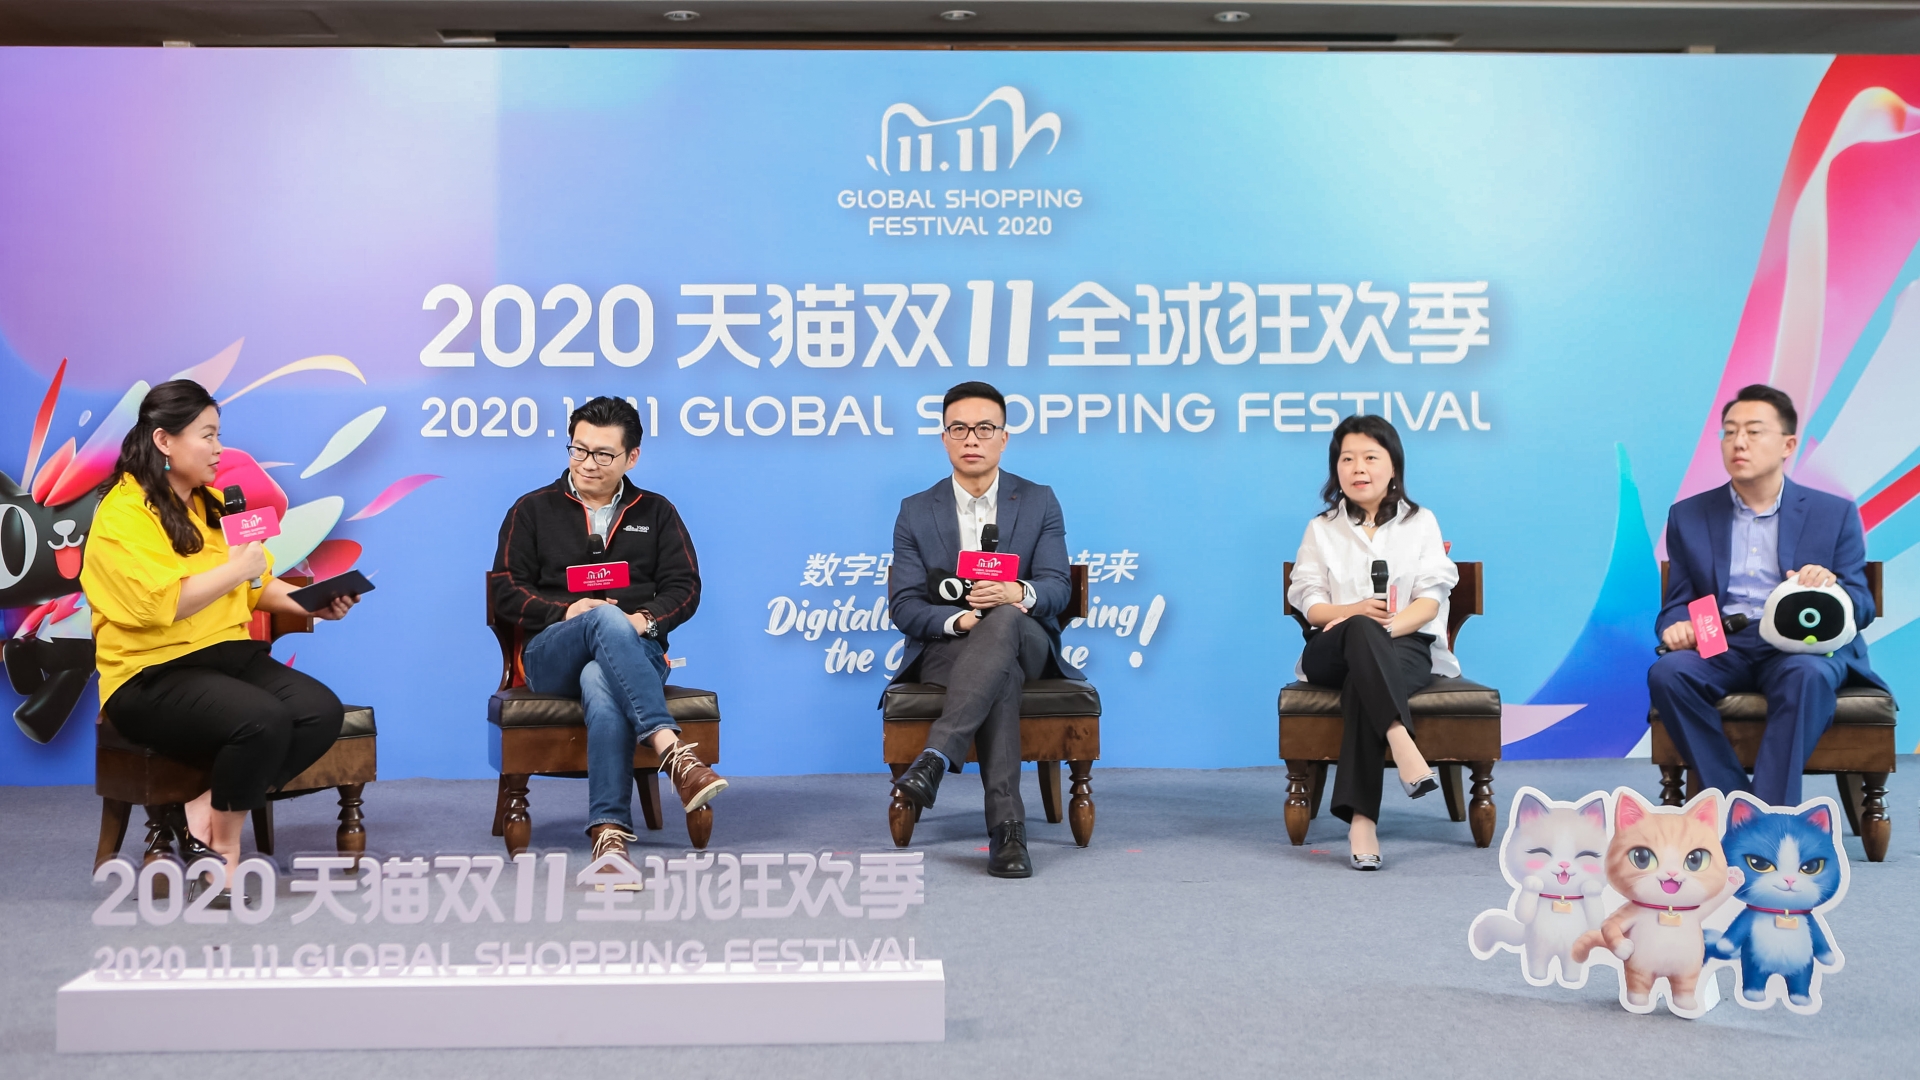 Alibaba 11.11 global shopping festival is on horizon